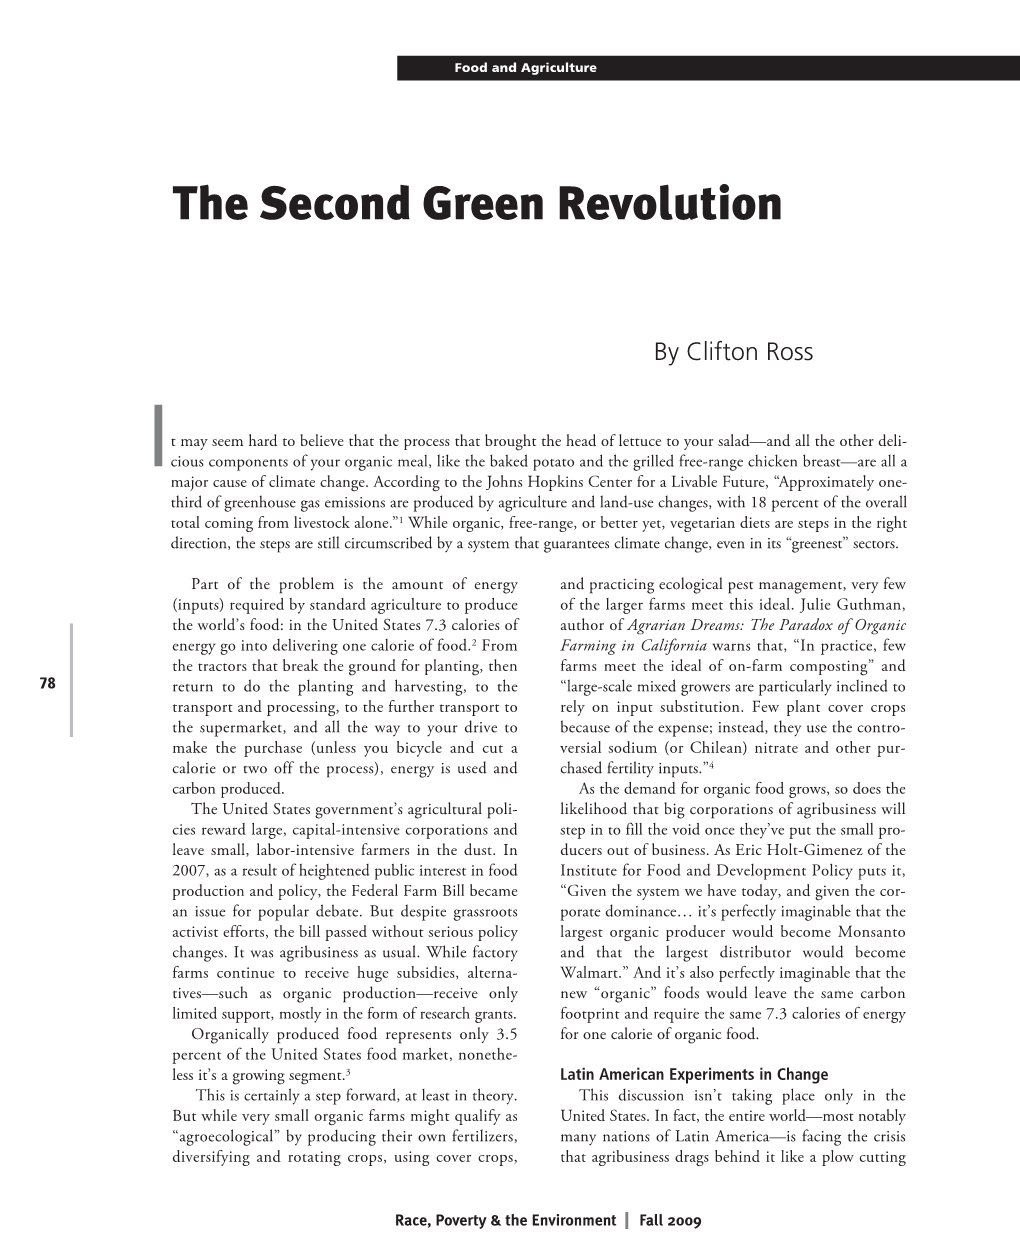 The Second Green Revolution